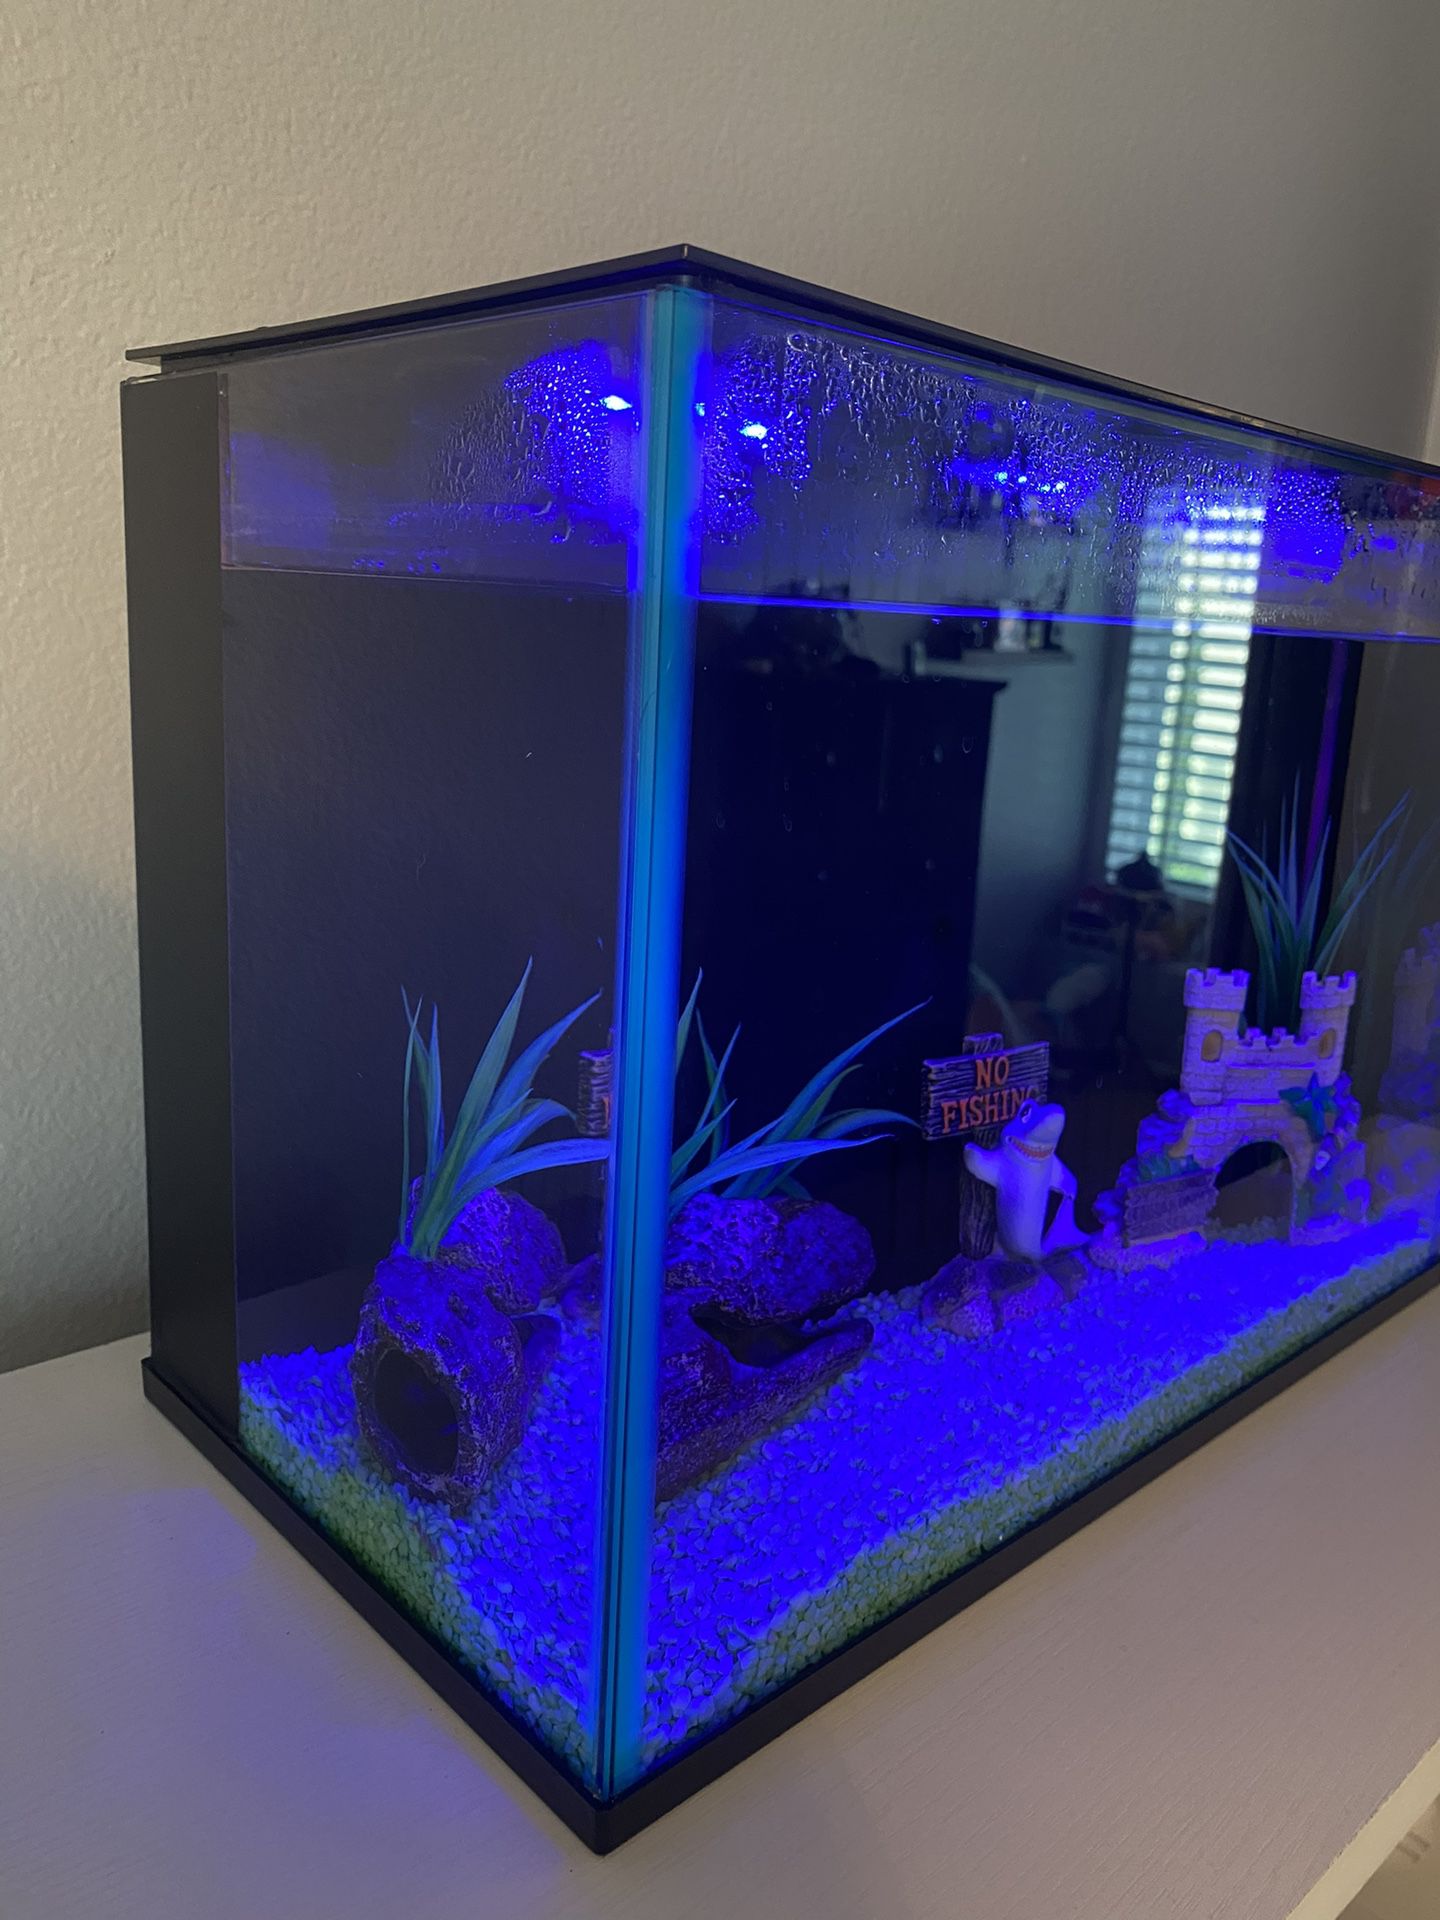 Top Fin multi- Color Fish Tank With Accessories